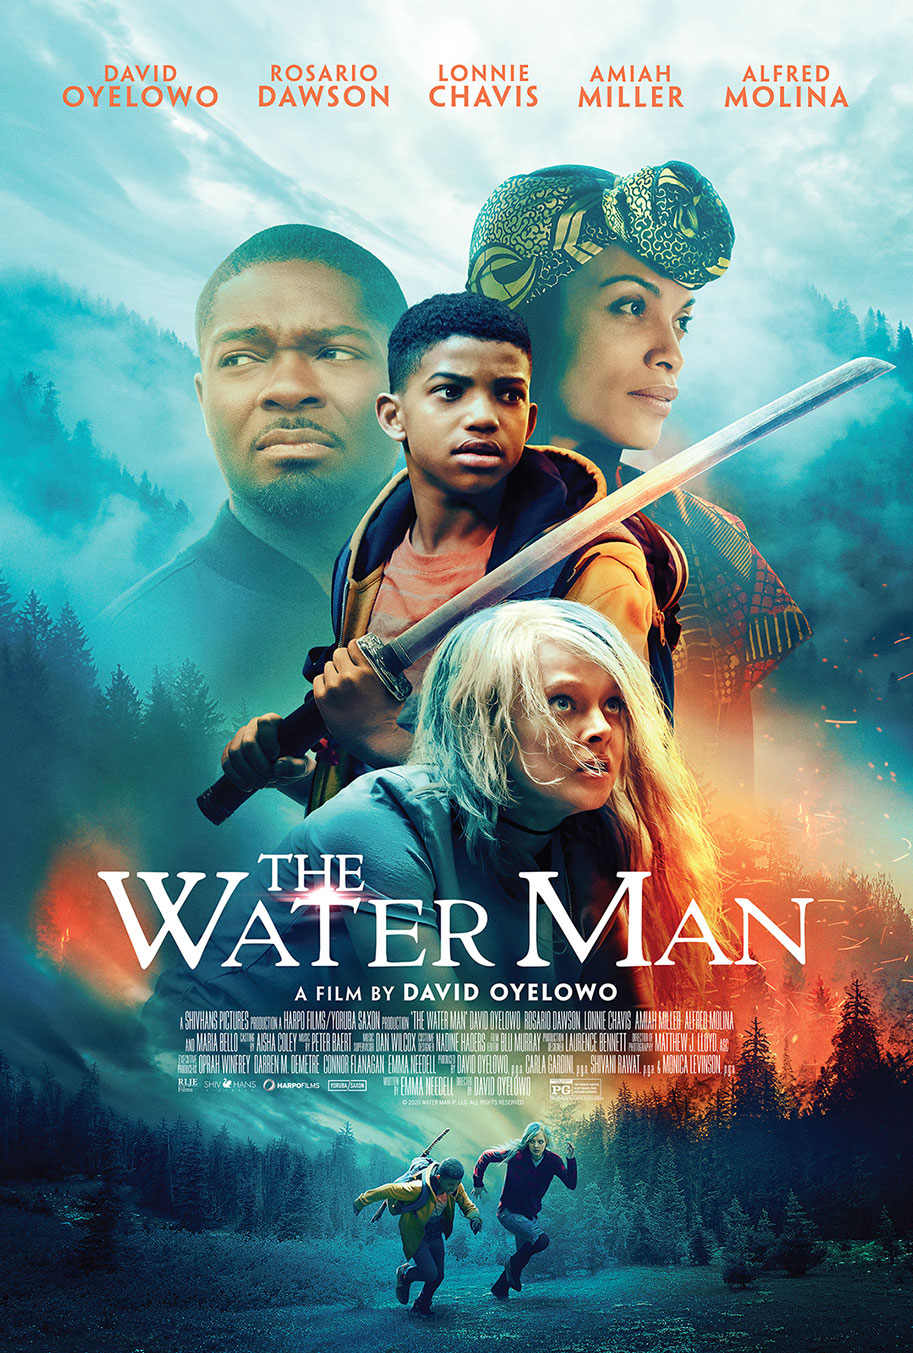 The Water Man, trailer, RLJE Films, David Oyelowo, Rosario Dawson